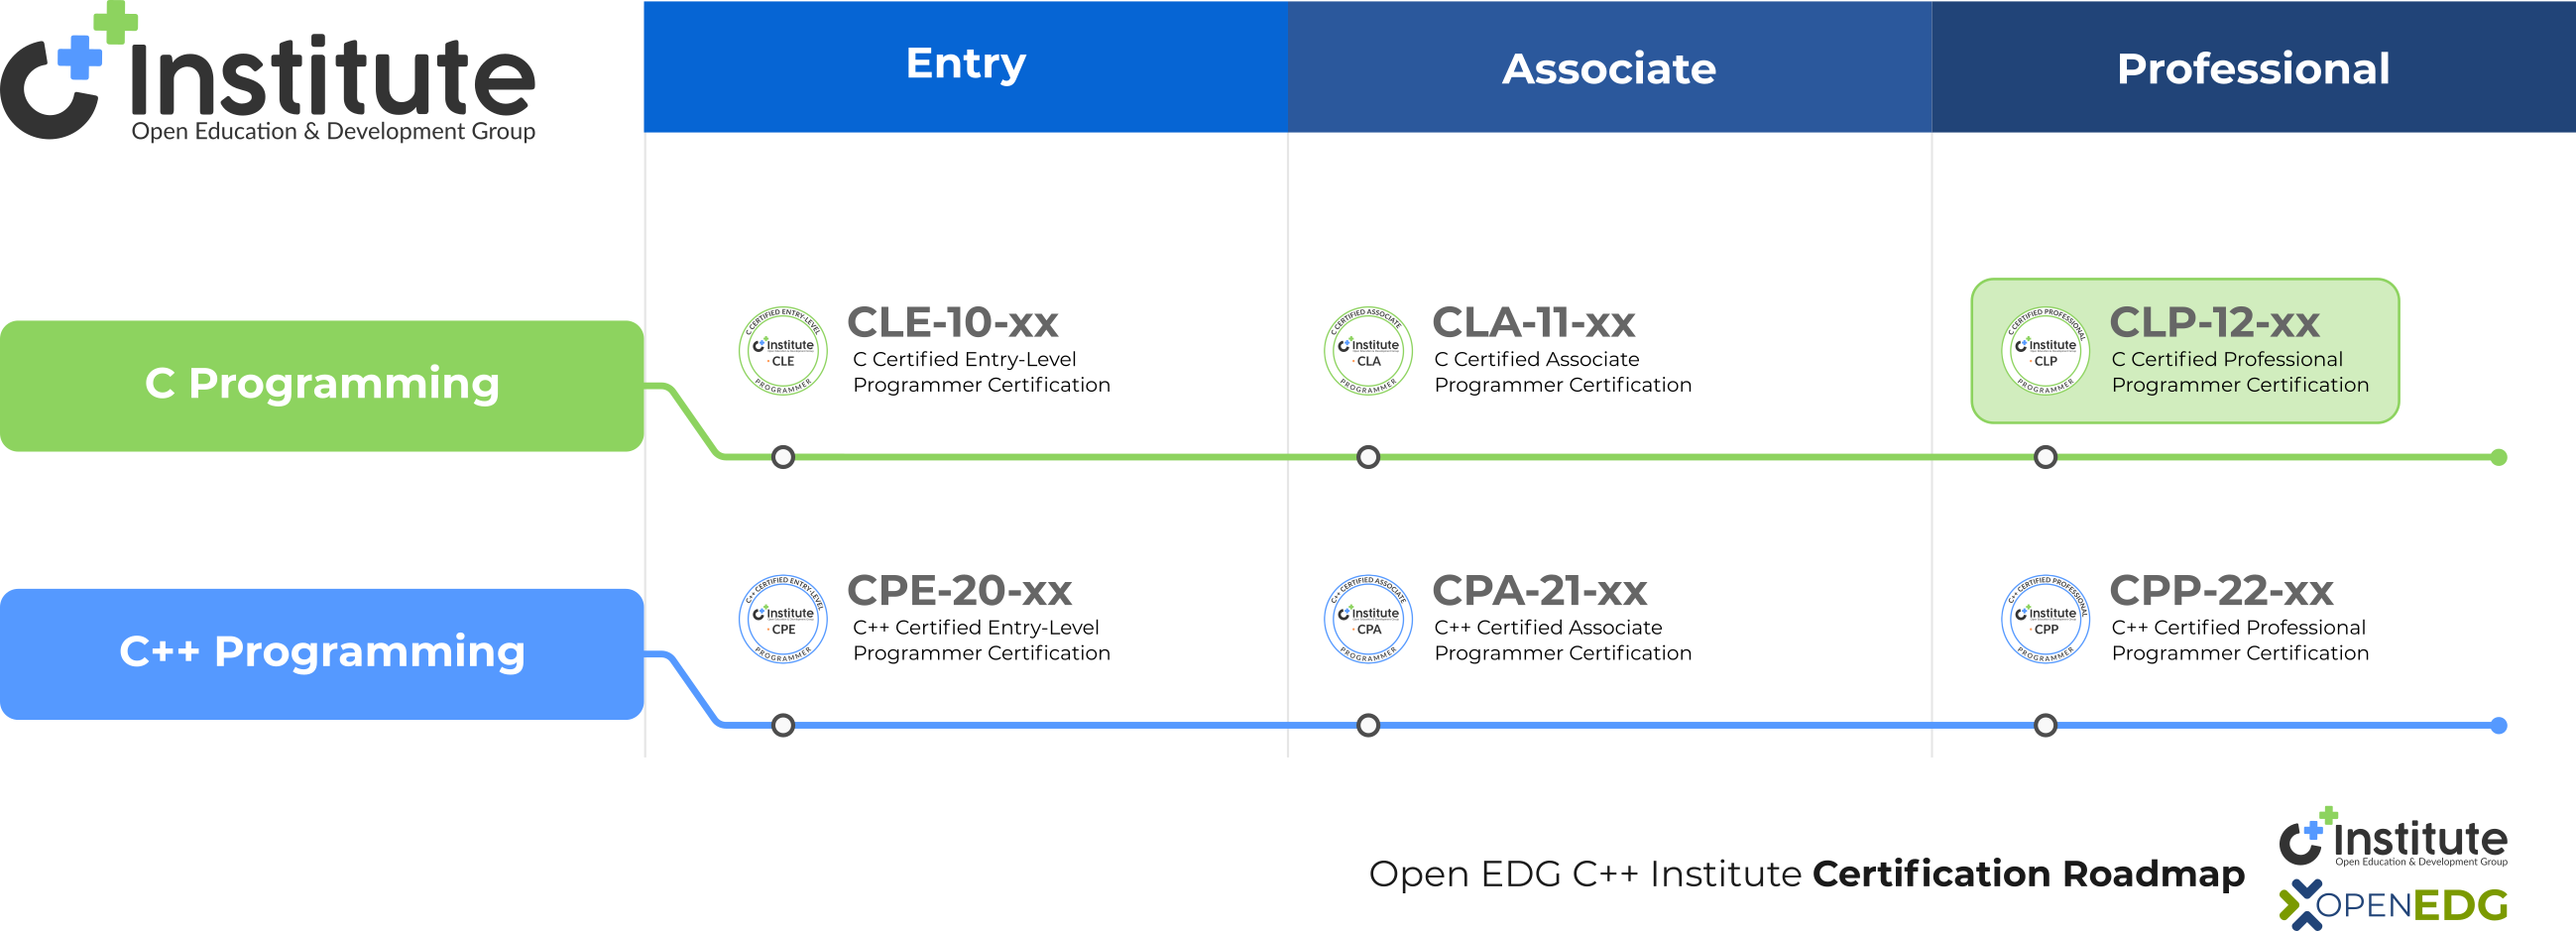 CLP exam on Certification Roadmap